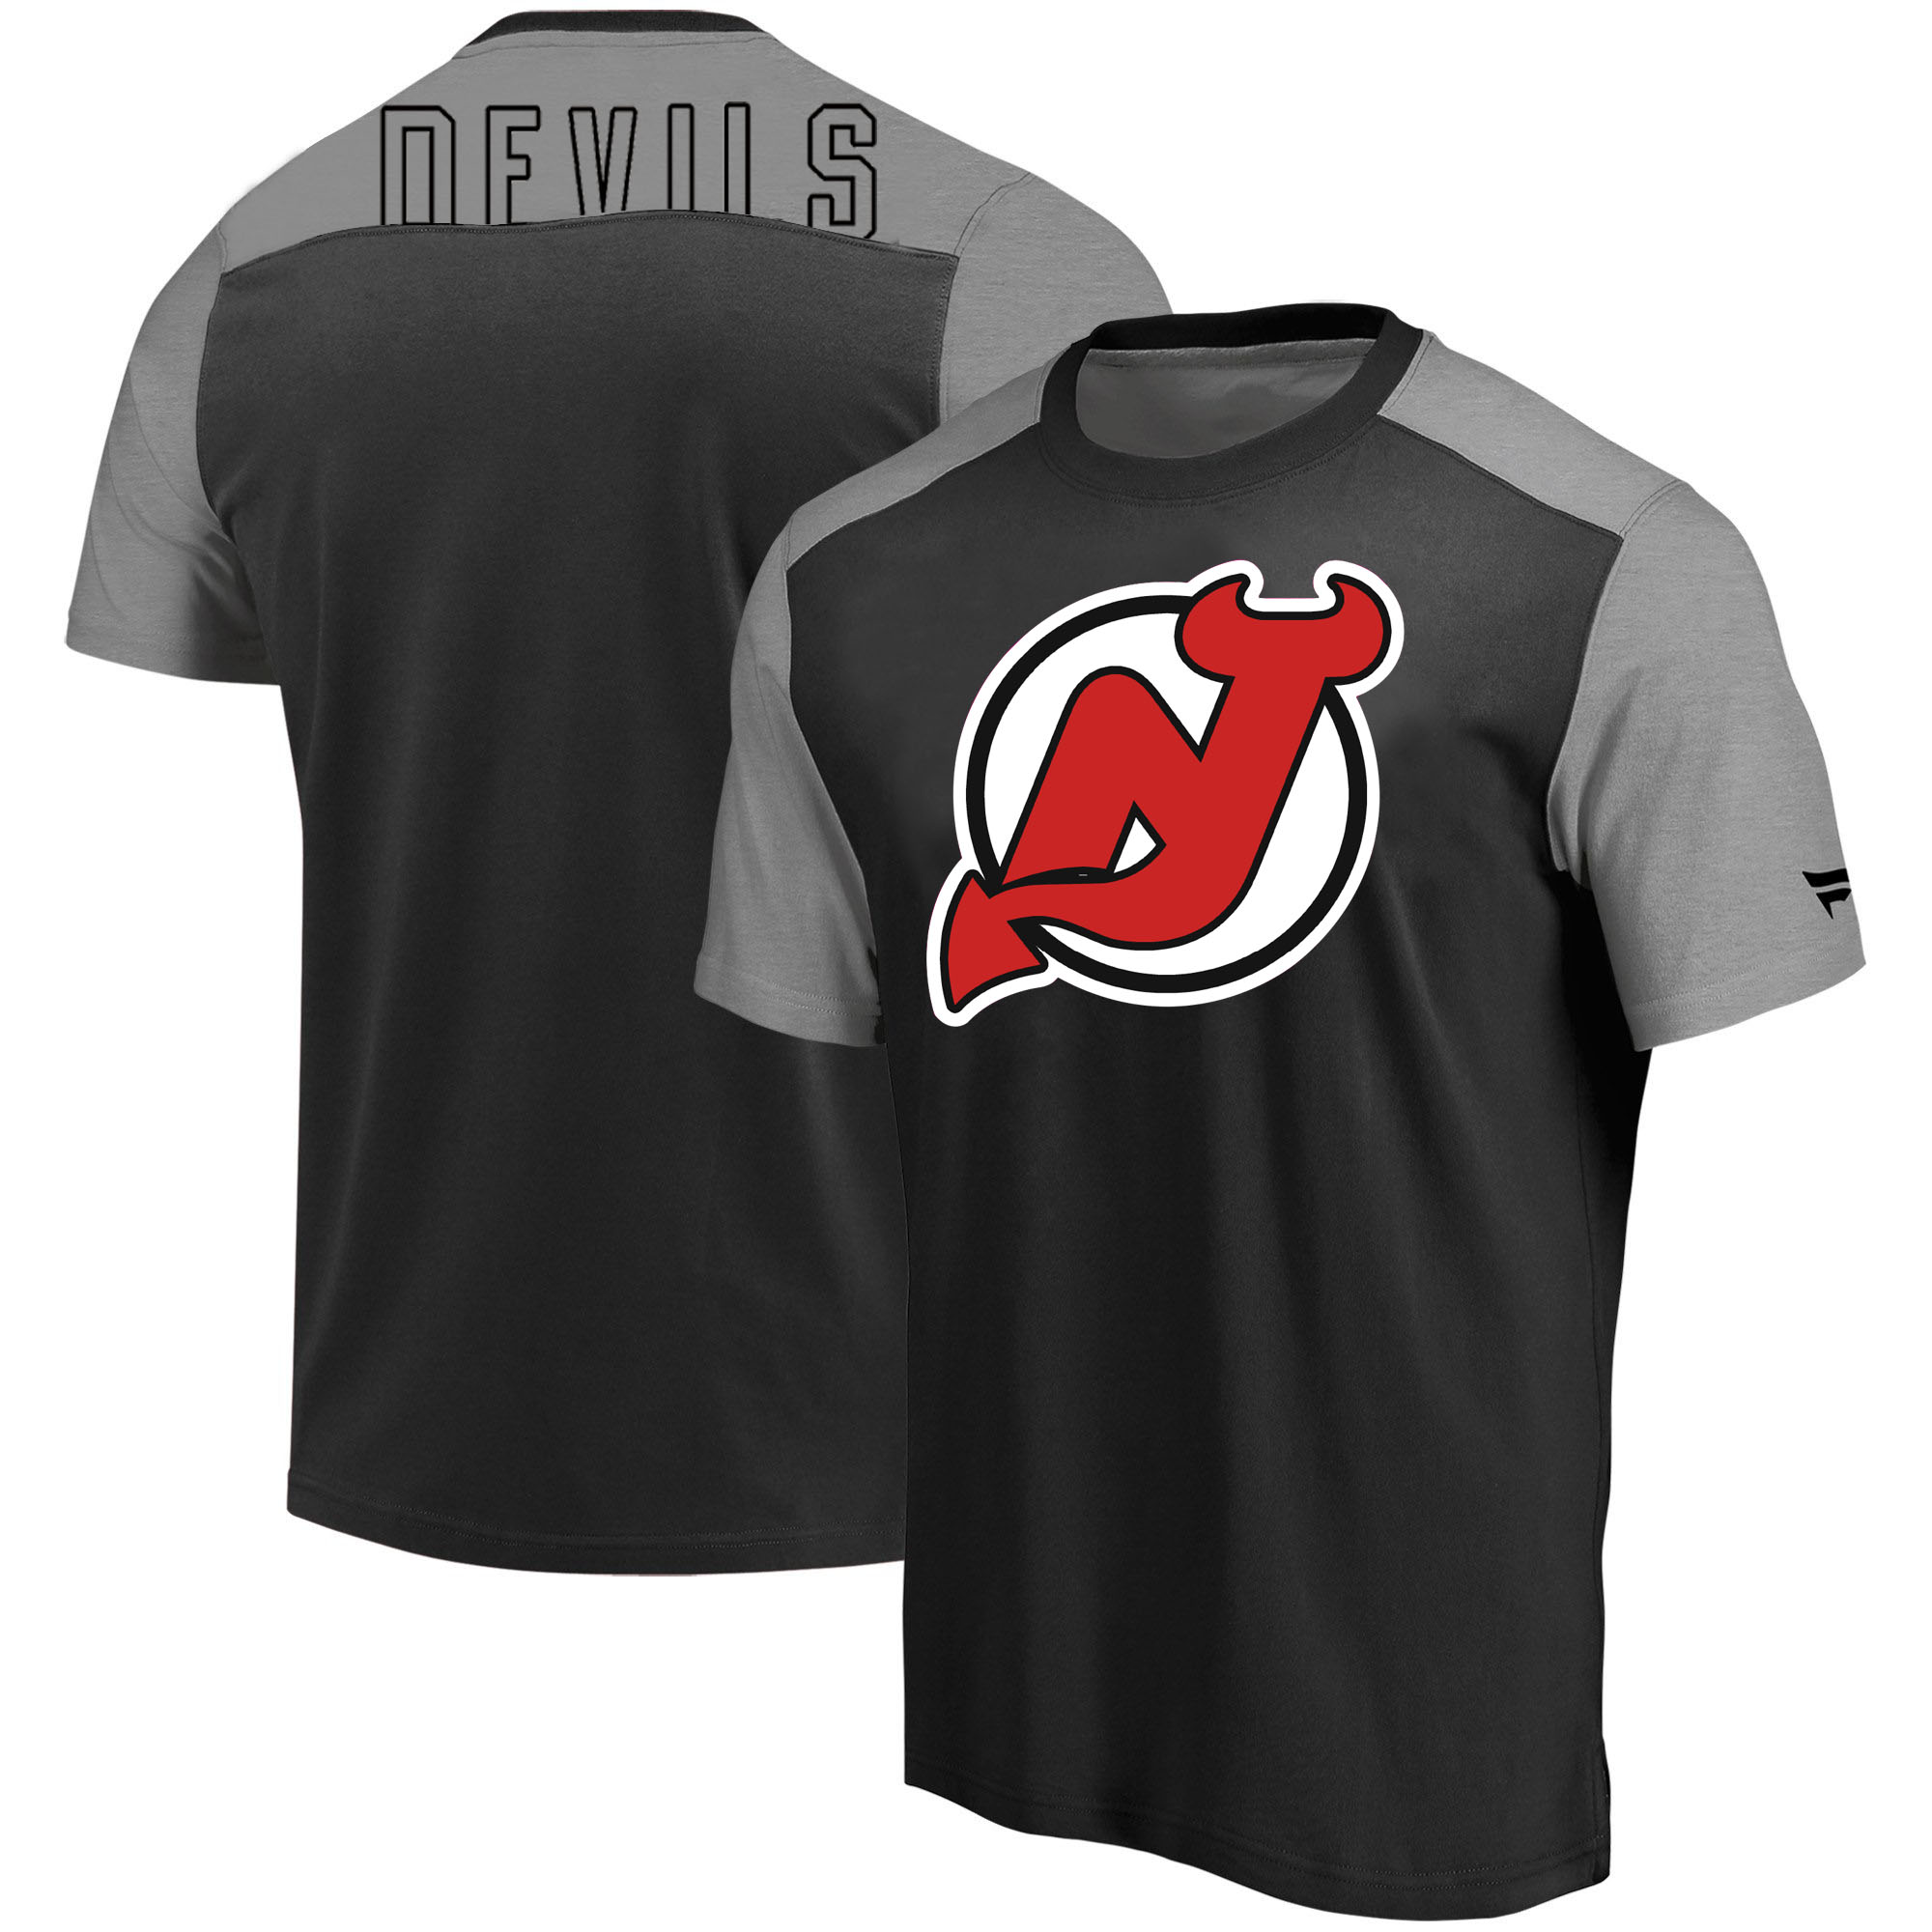 New Jersey Devils Fanatics Branded Iconic Blocked T-Shirt Black Heathered Gray